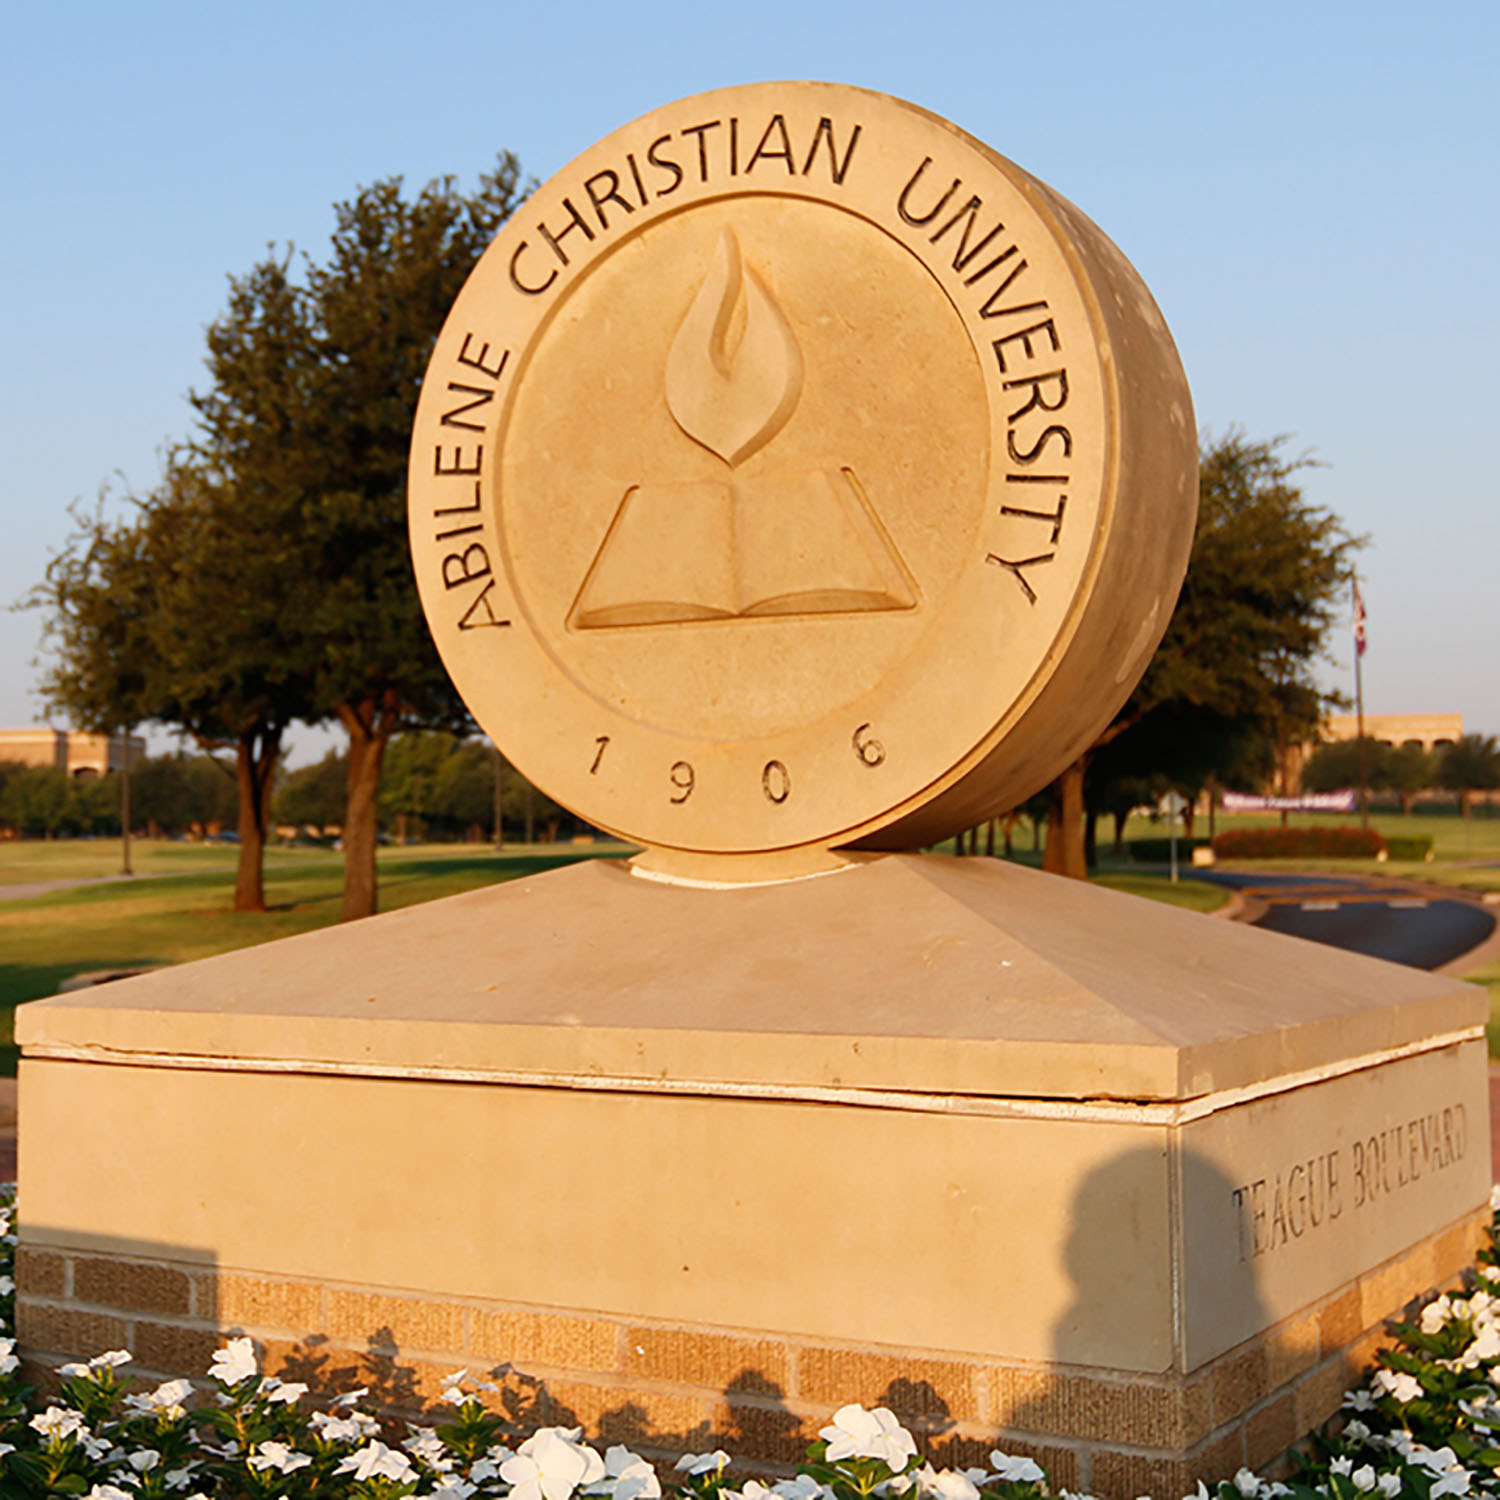 abilene christian university virtual tour